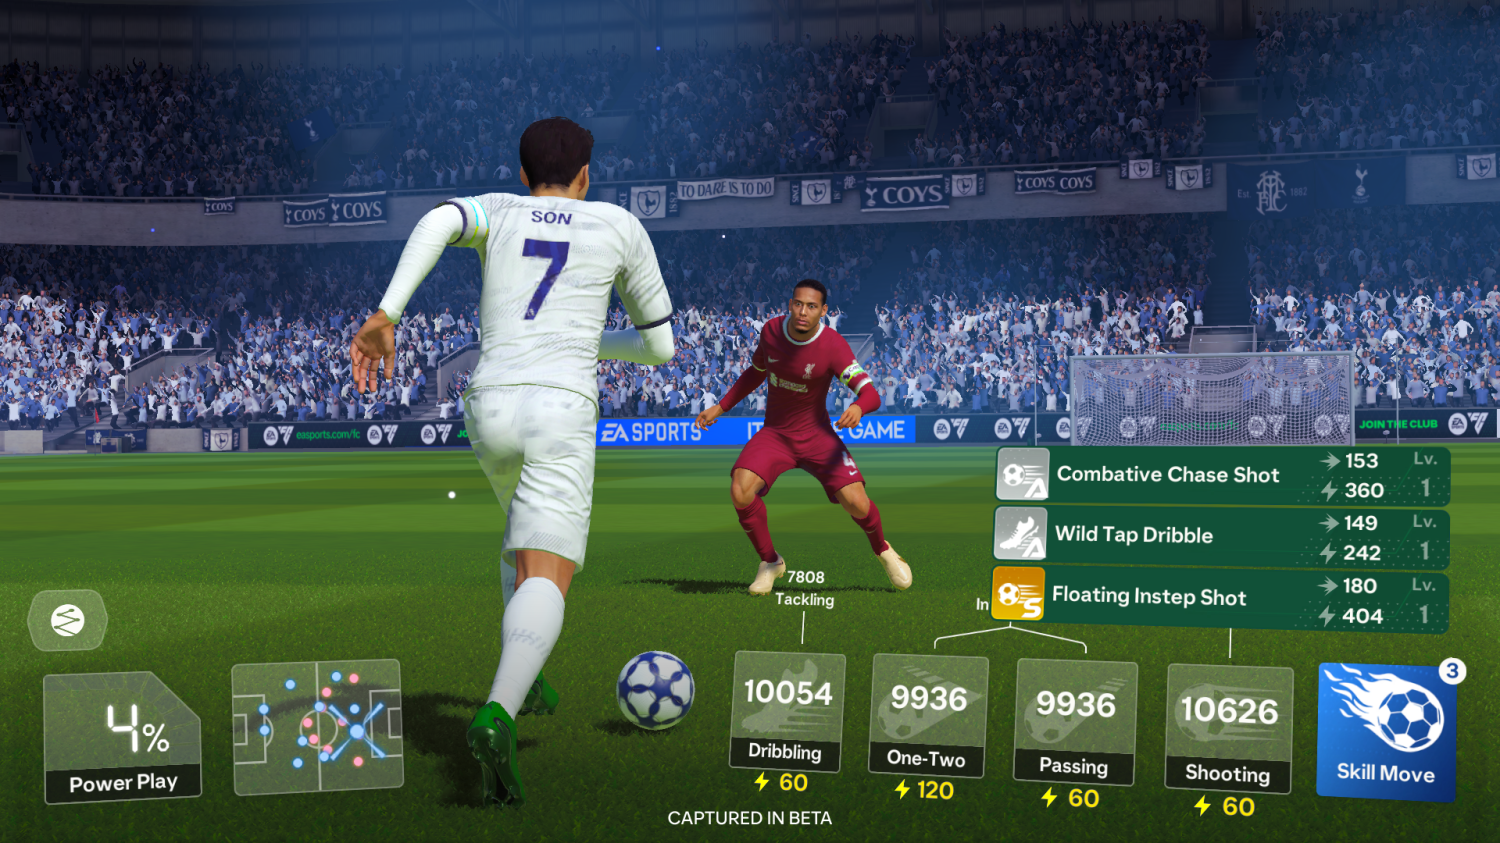 Football/Soccer: FIFA 11 modified plus SAQ (Technical: Passing